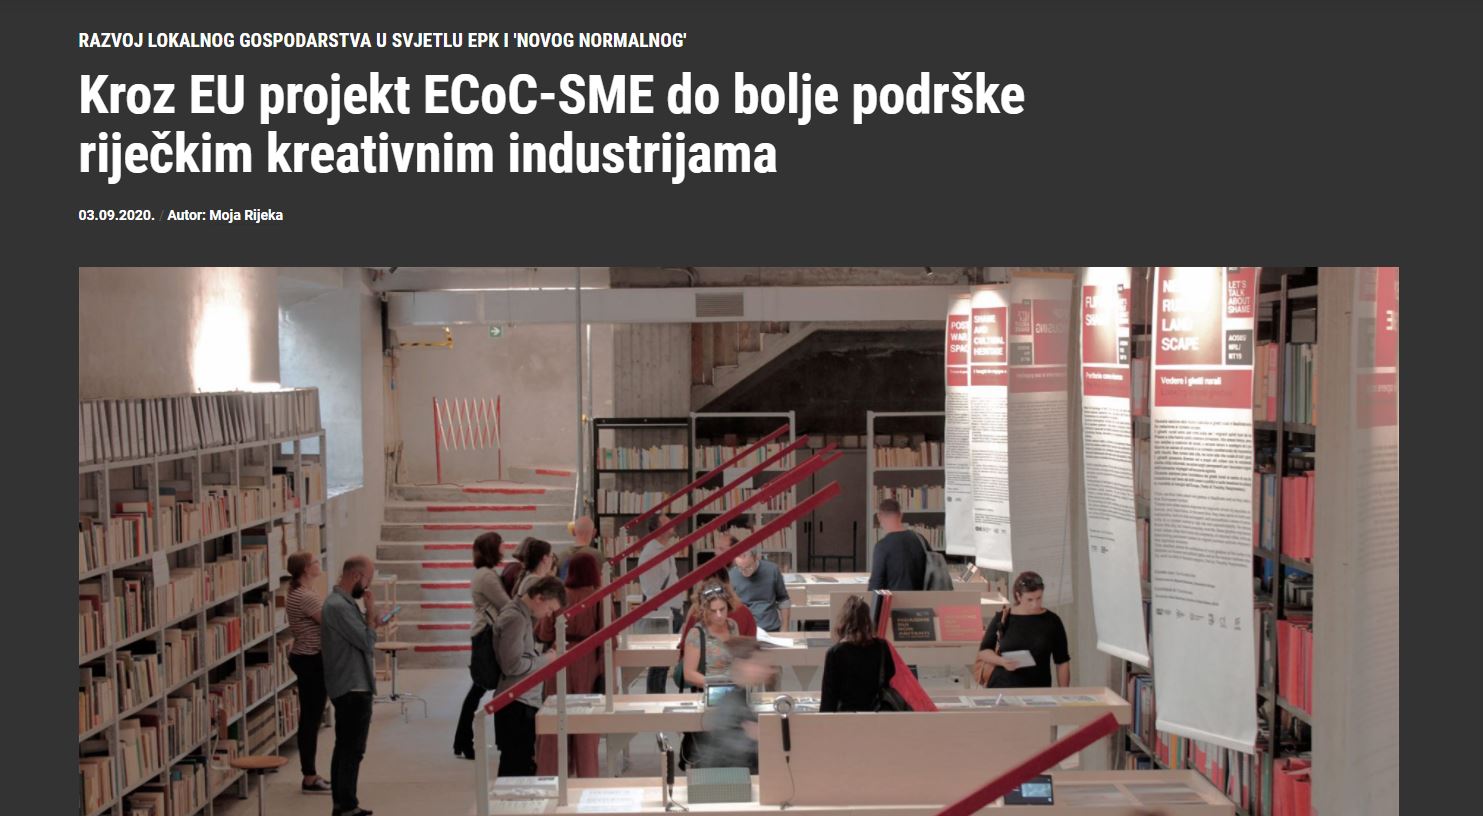 In the news: ECoC-SME in Rijeka